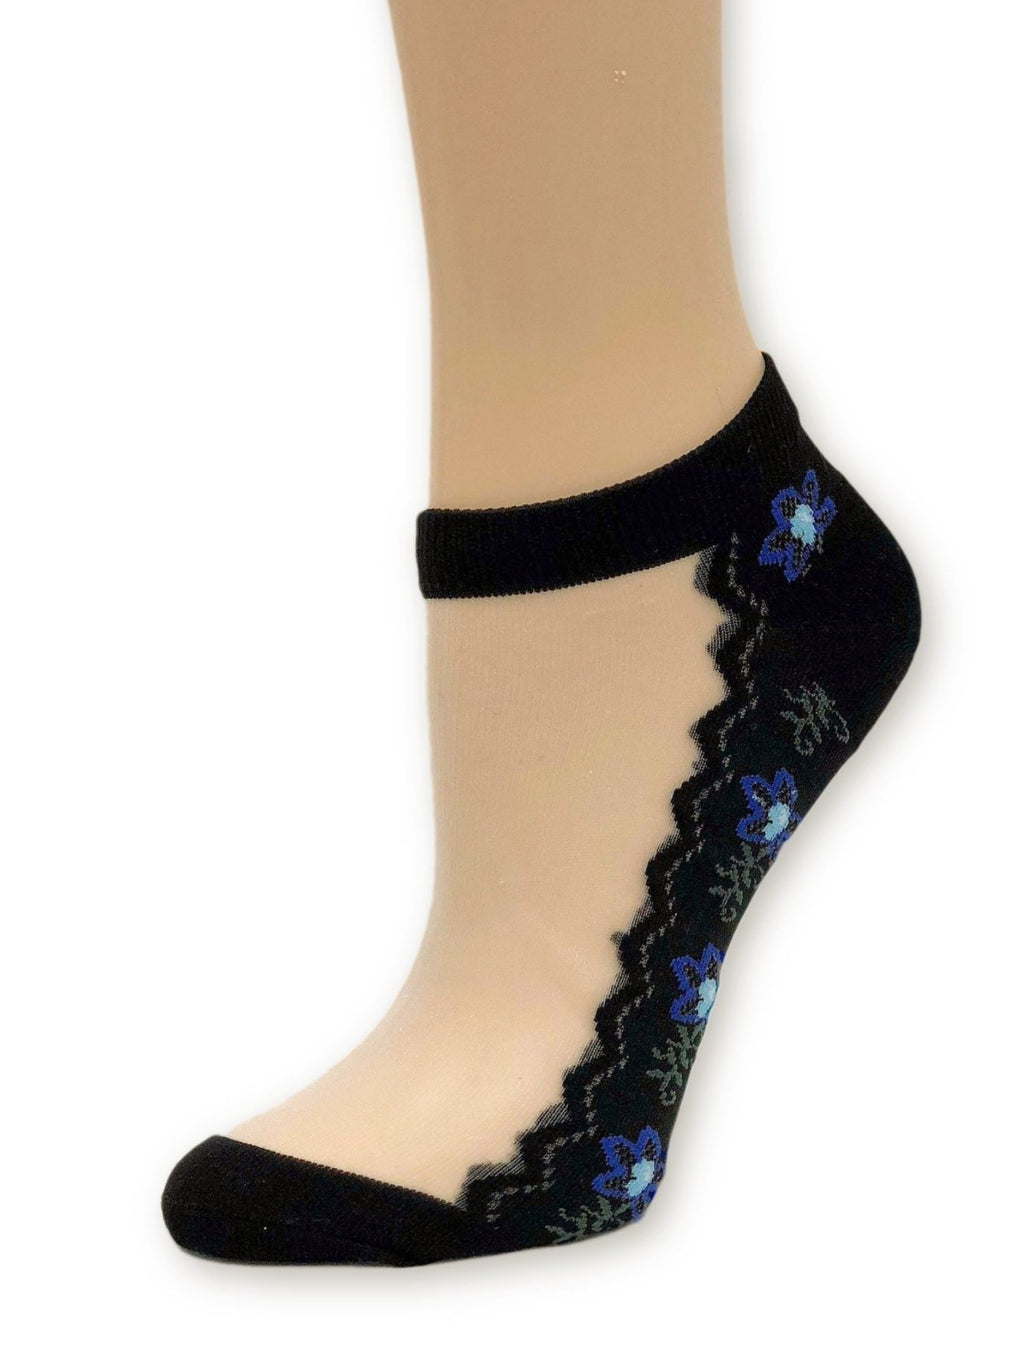 Charming Sea Blue Ankle Sheer Socks - Global Trendz Fashion®